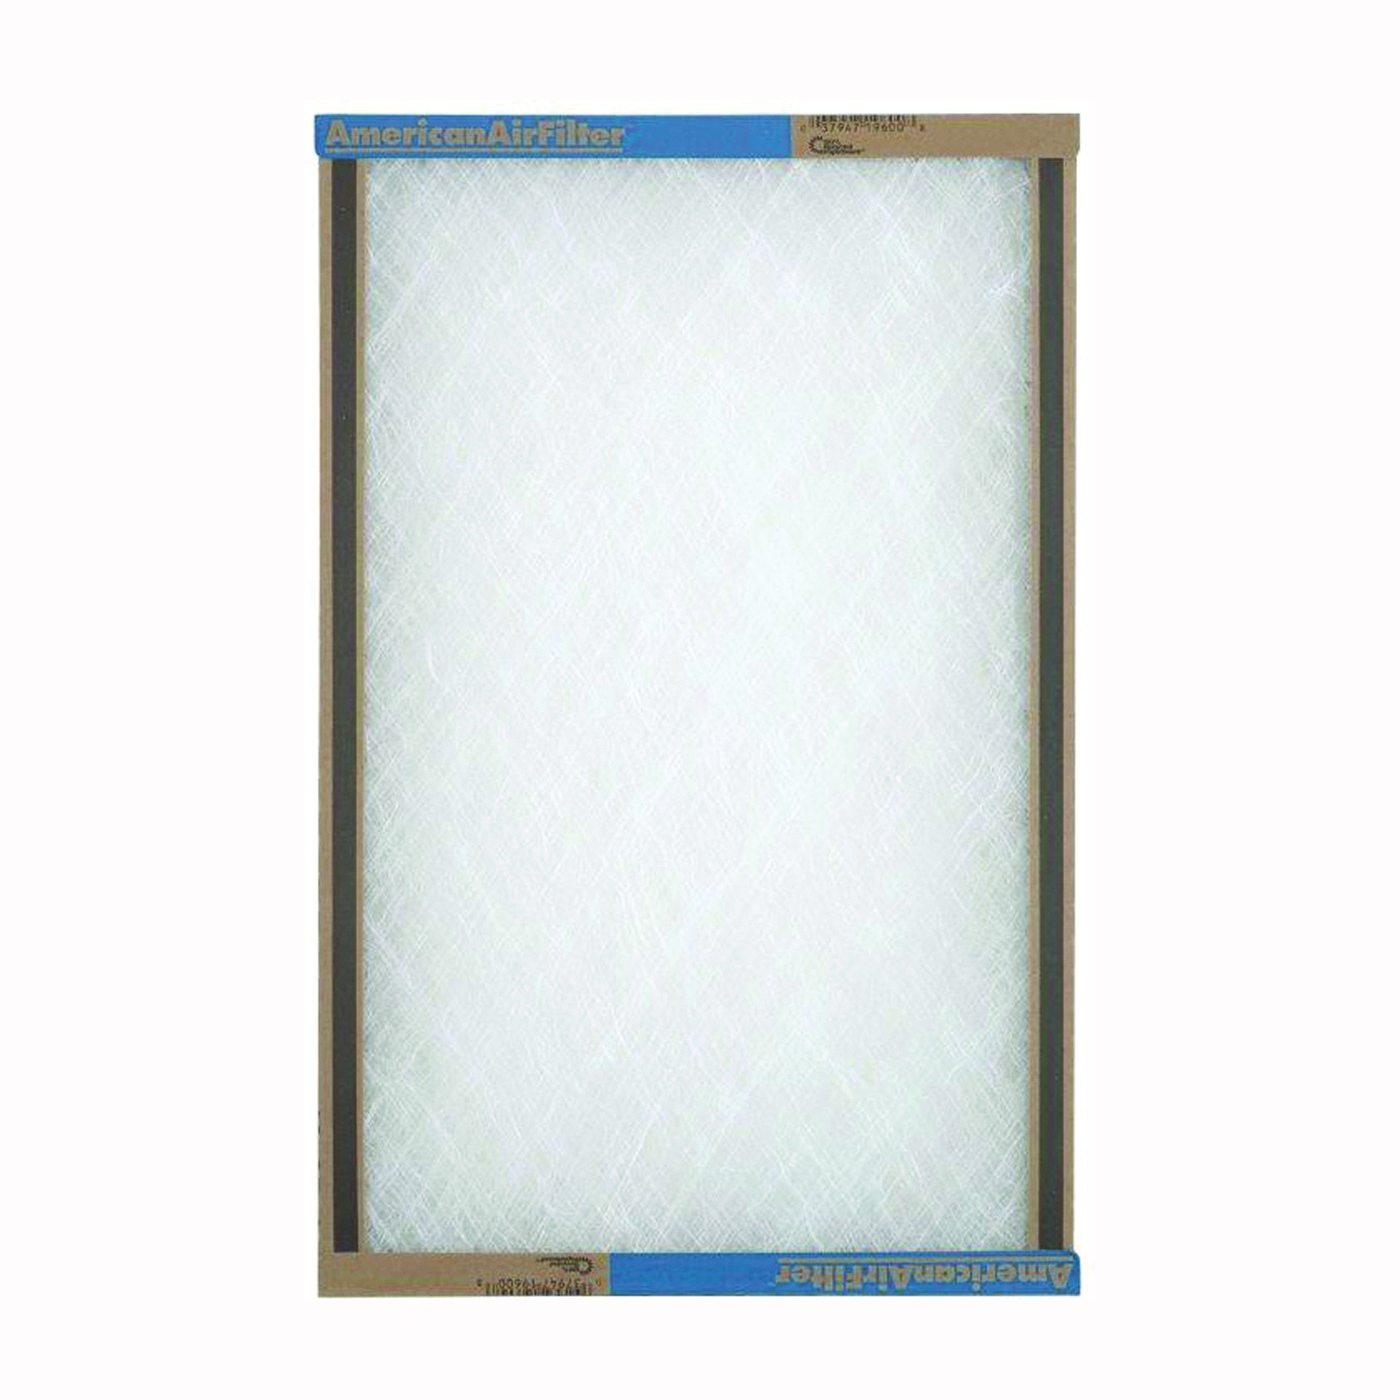 112301 Panel Air Filter, 30 x 12 x 1, Chipboard Frame